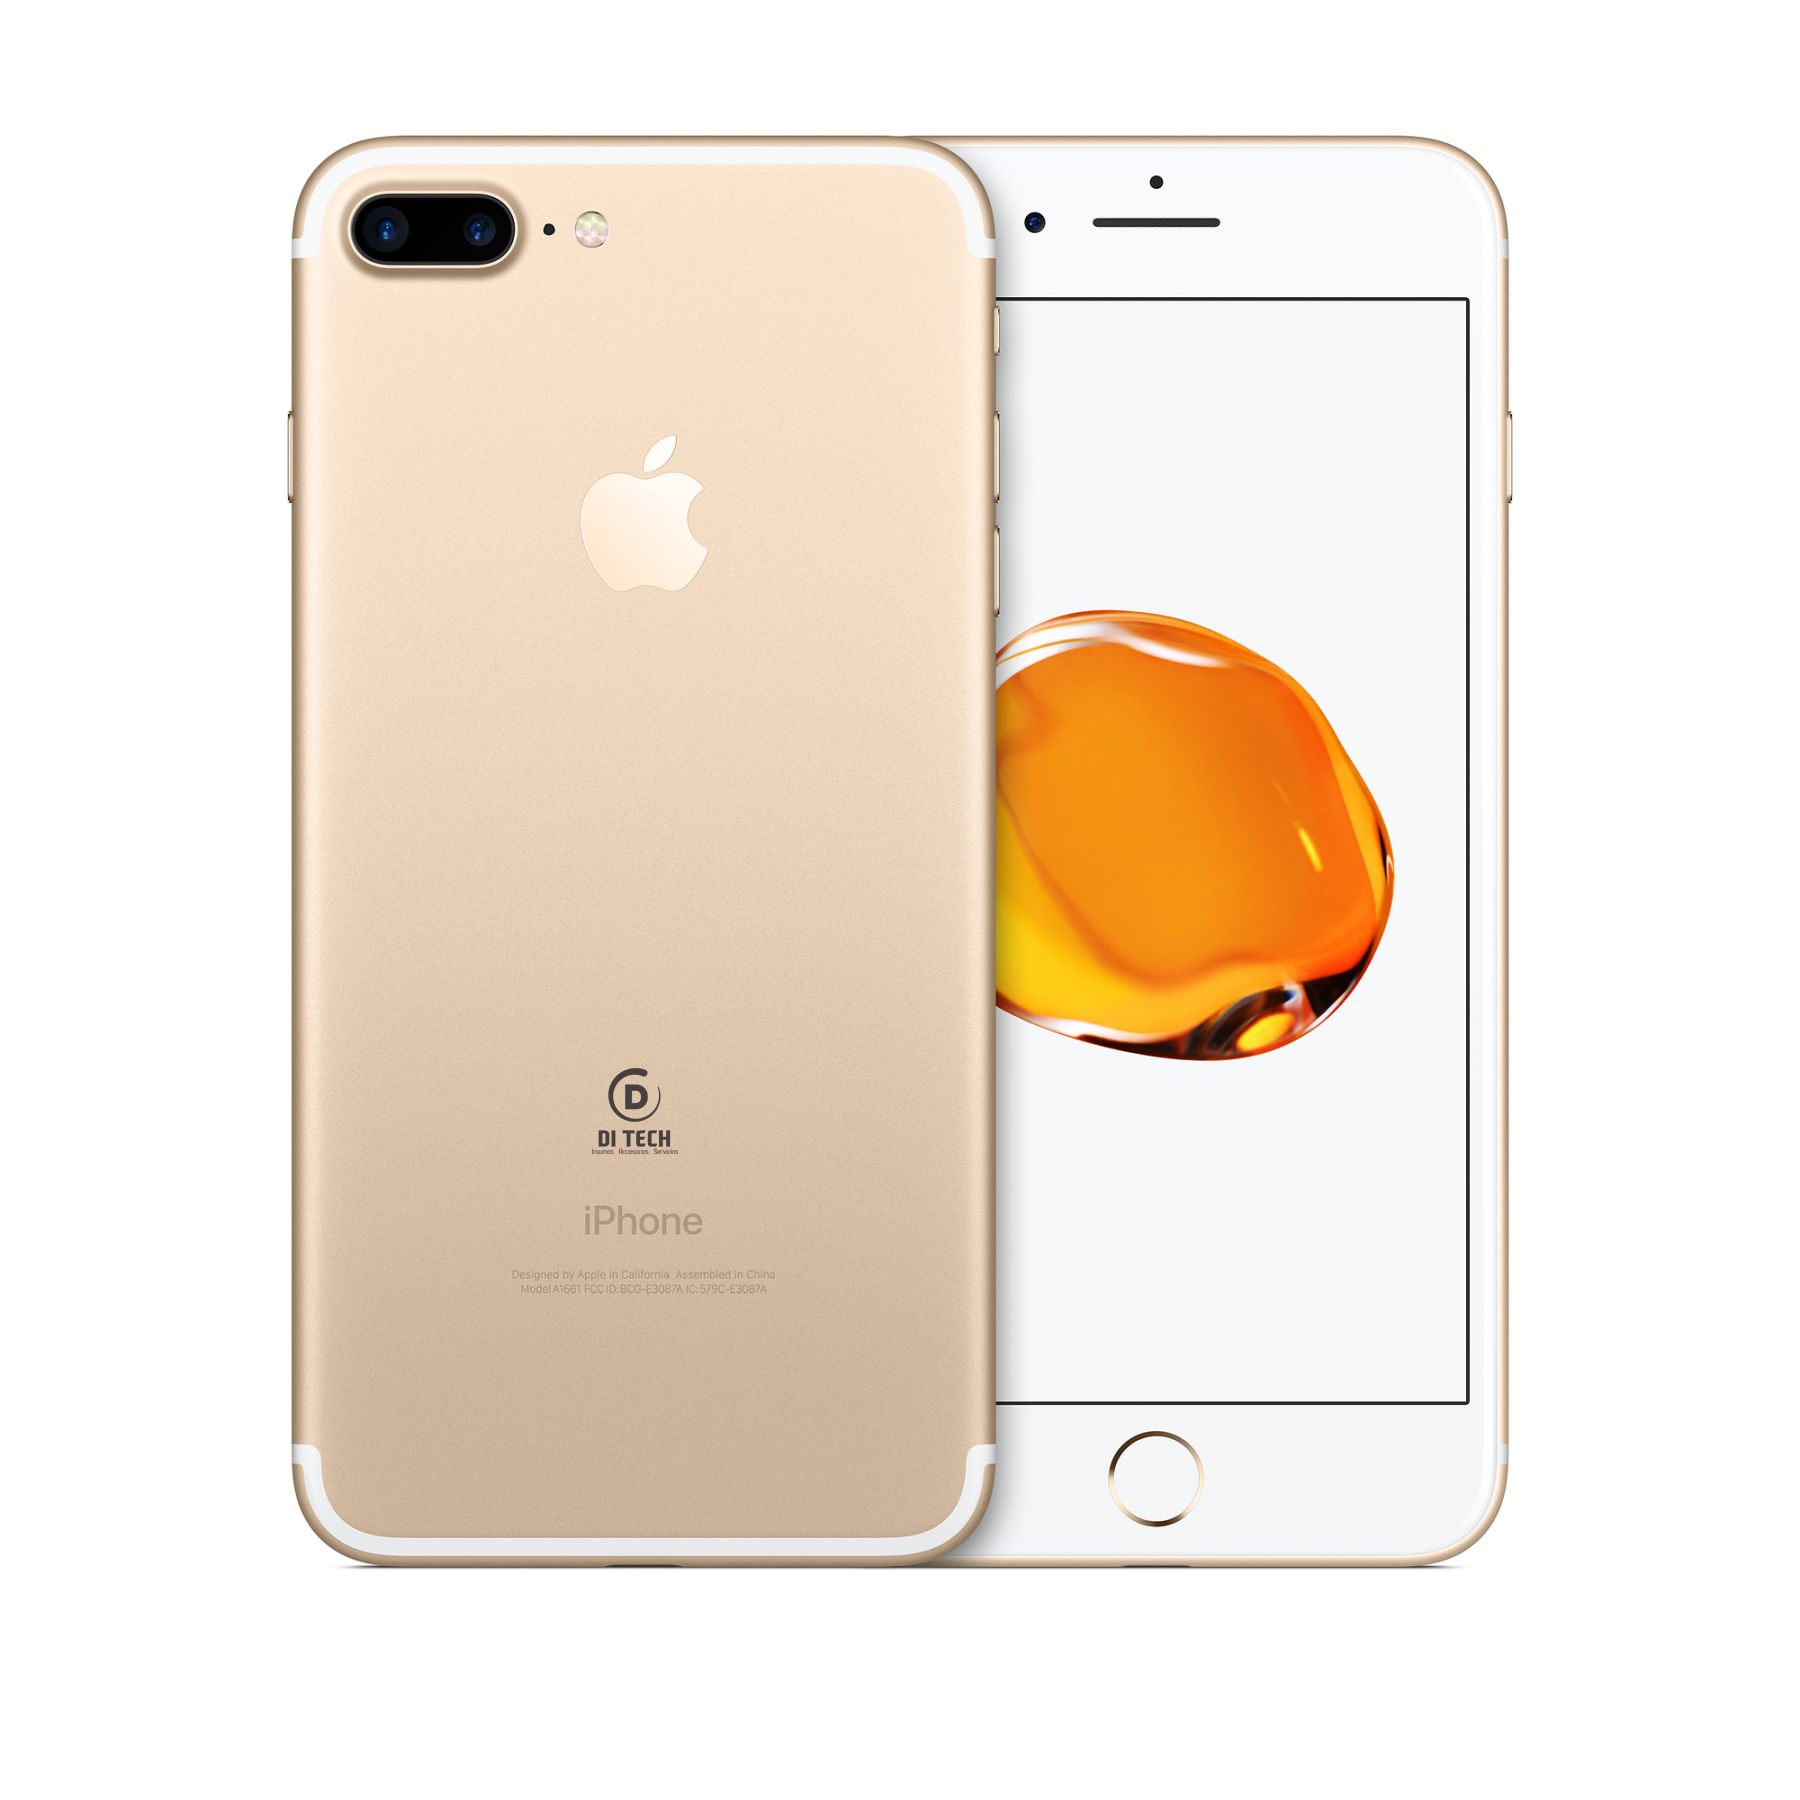 Compre Celular Apple iPhone 7 Plus LL/A1784, 3/32GB